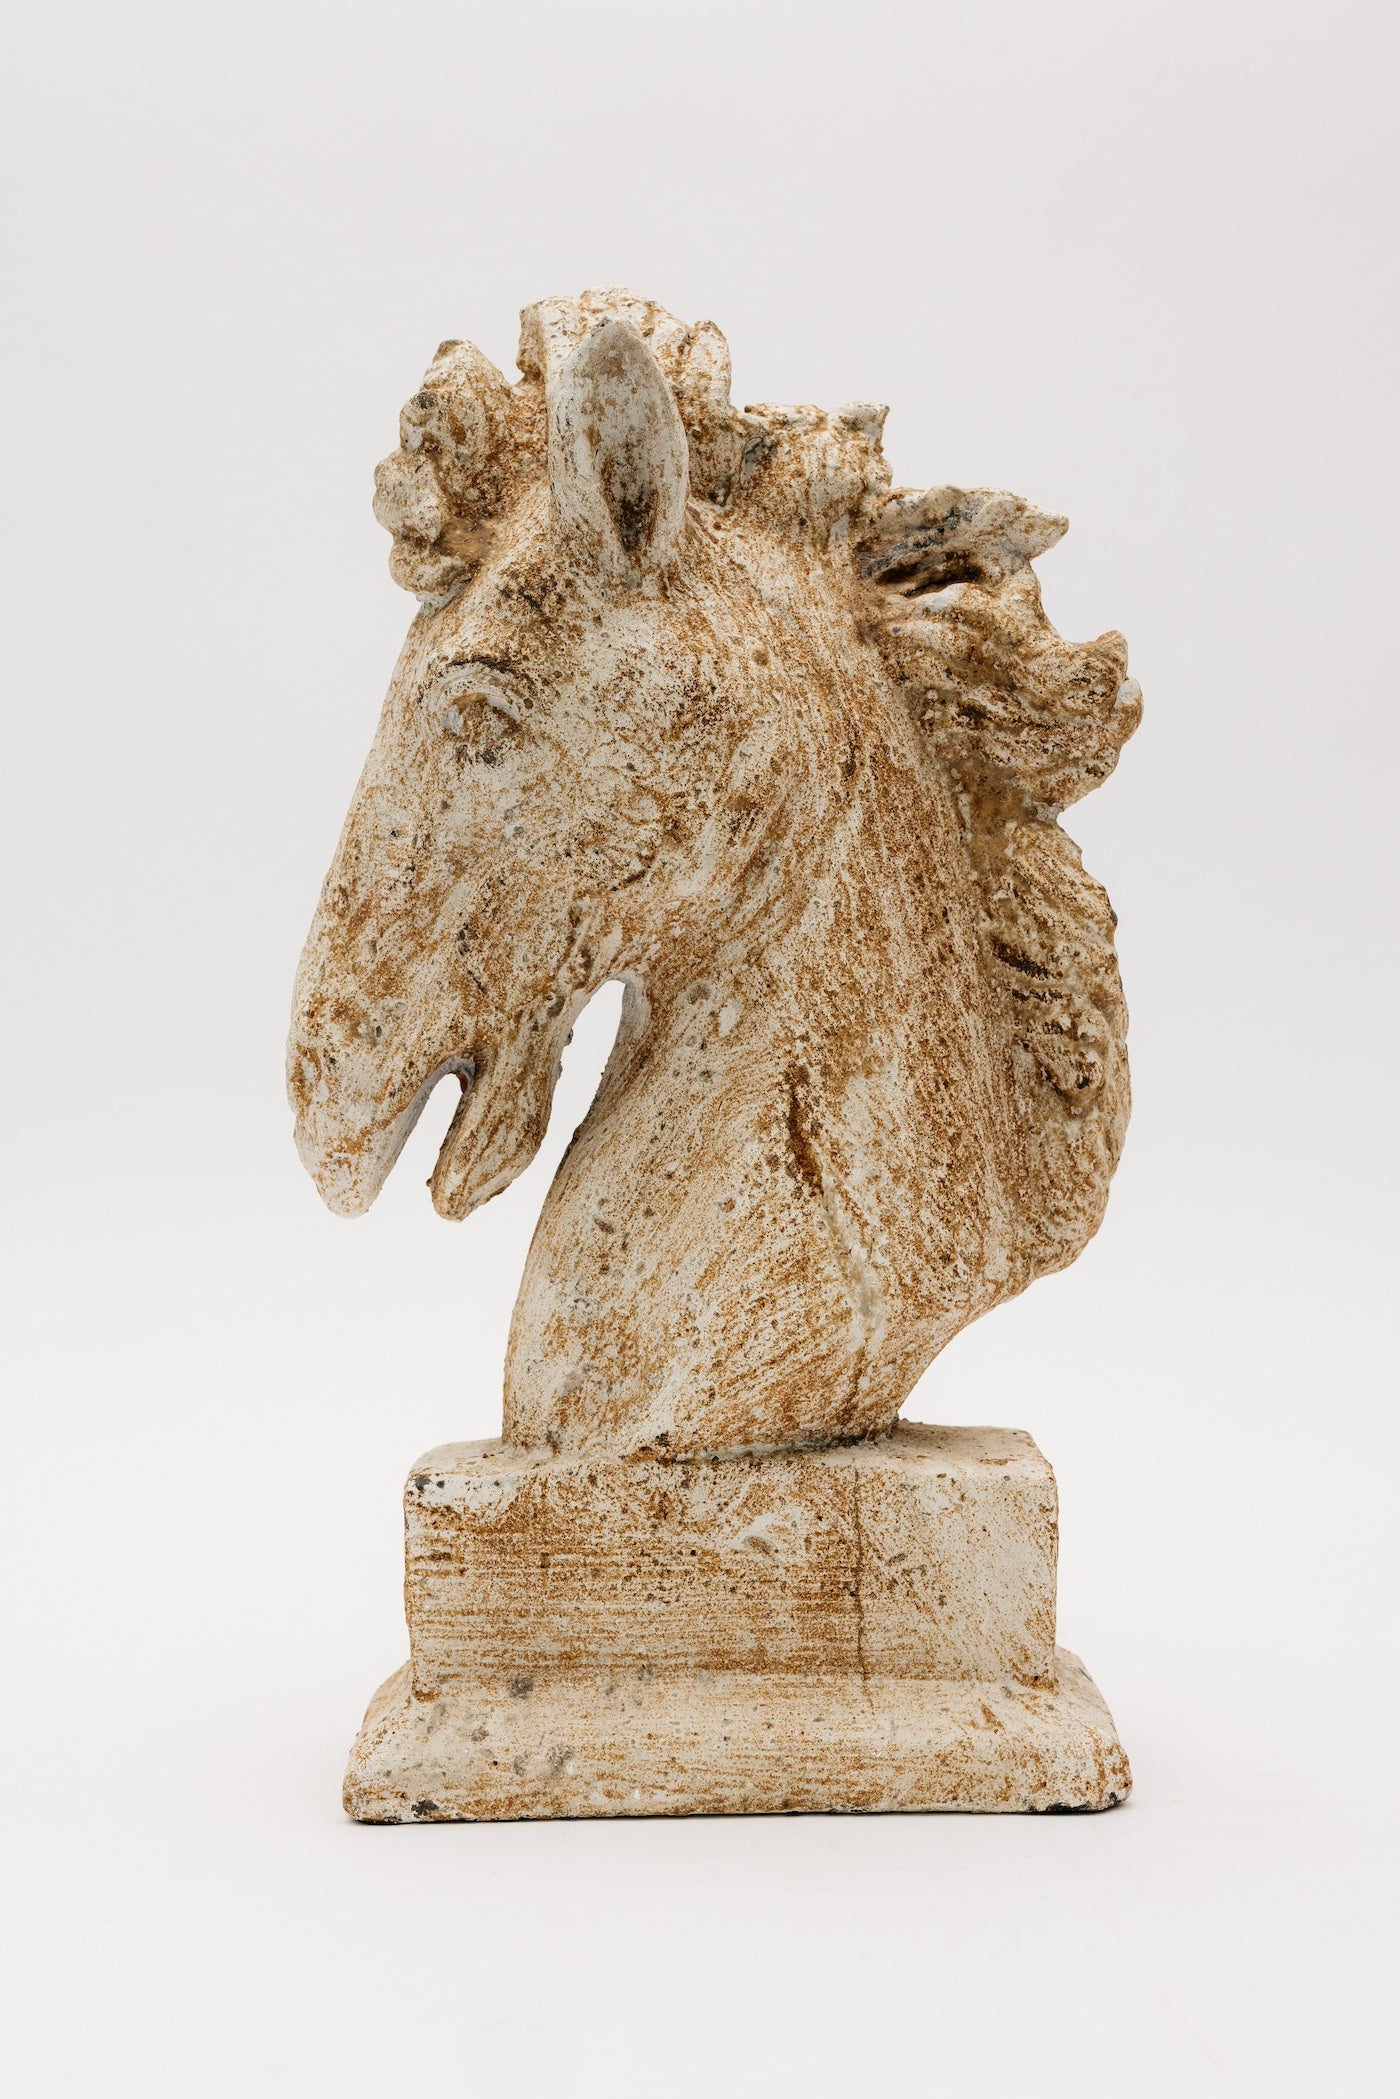 Carsten Horse Figure - 2 Sizes